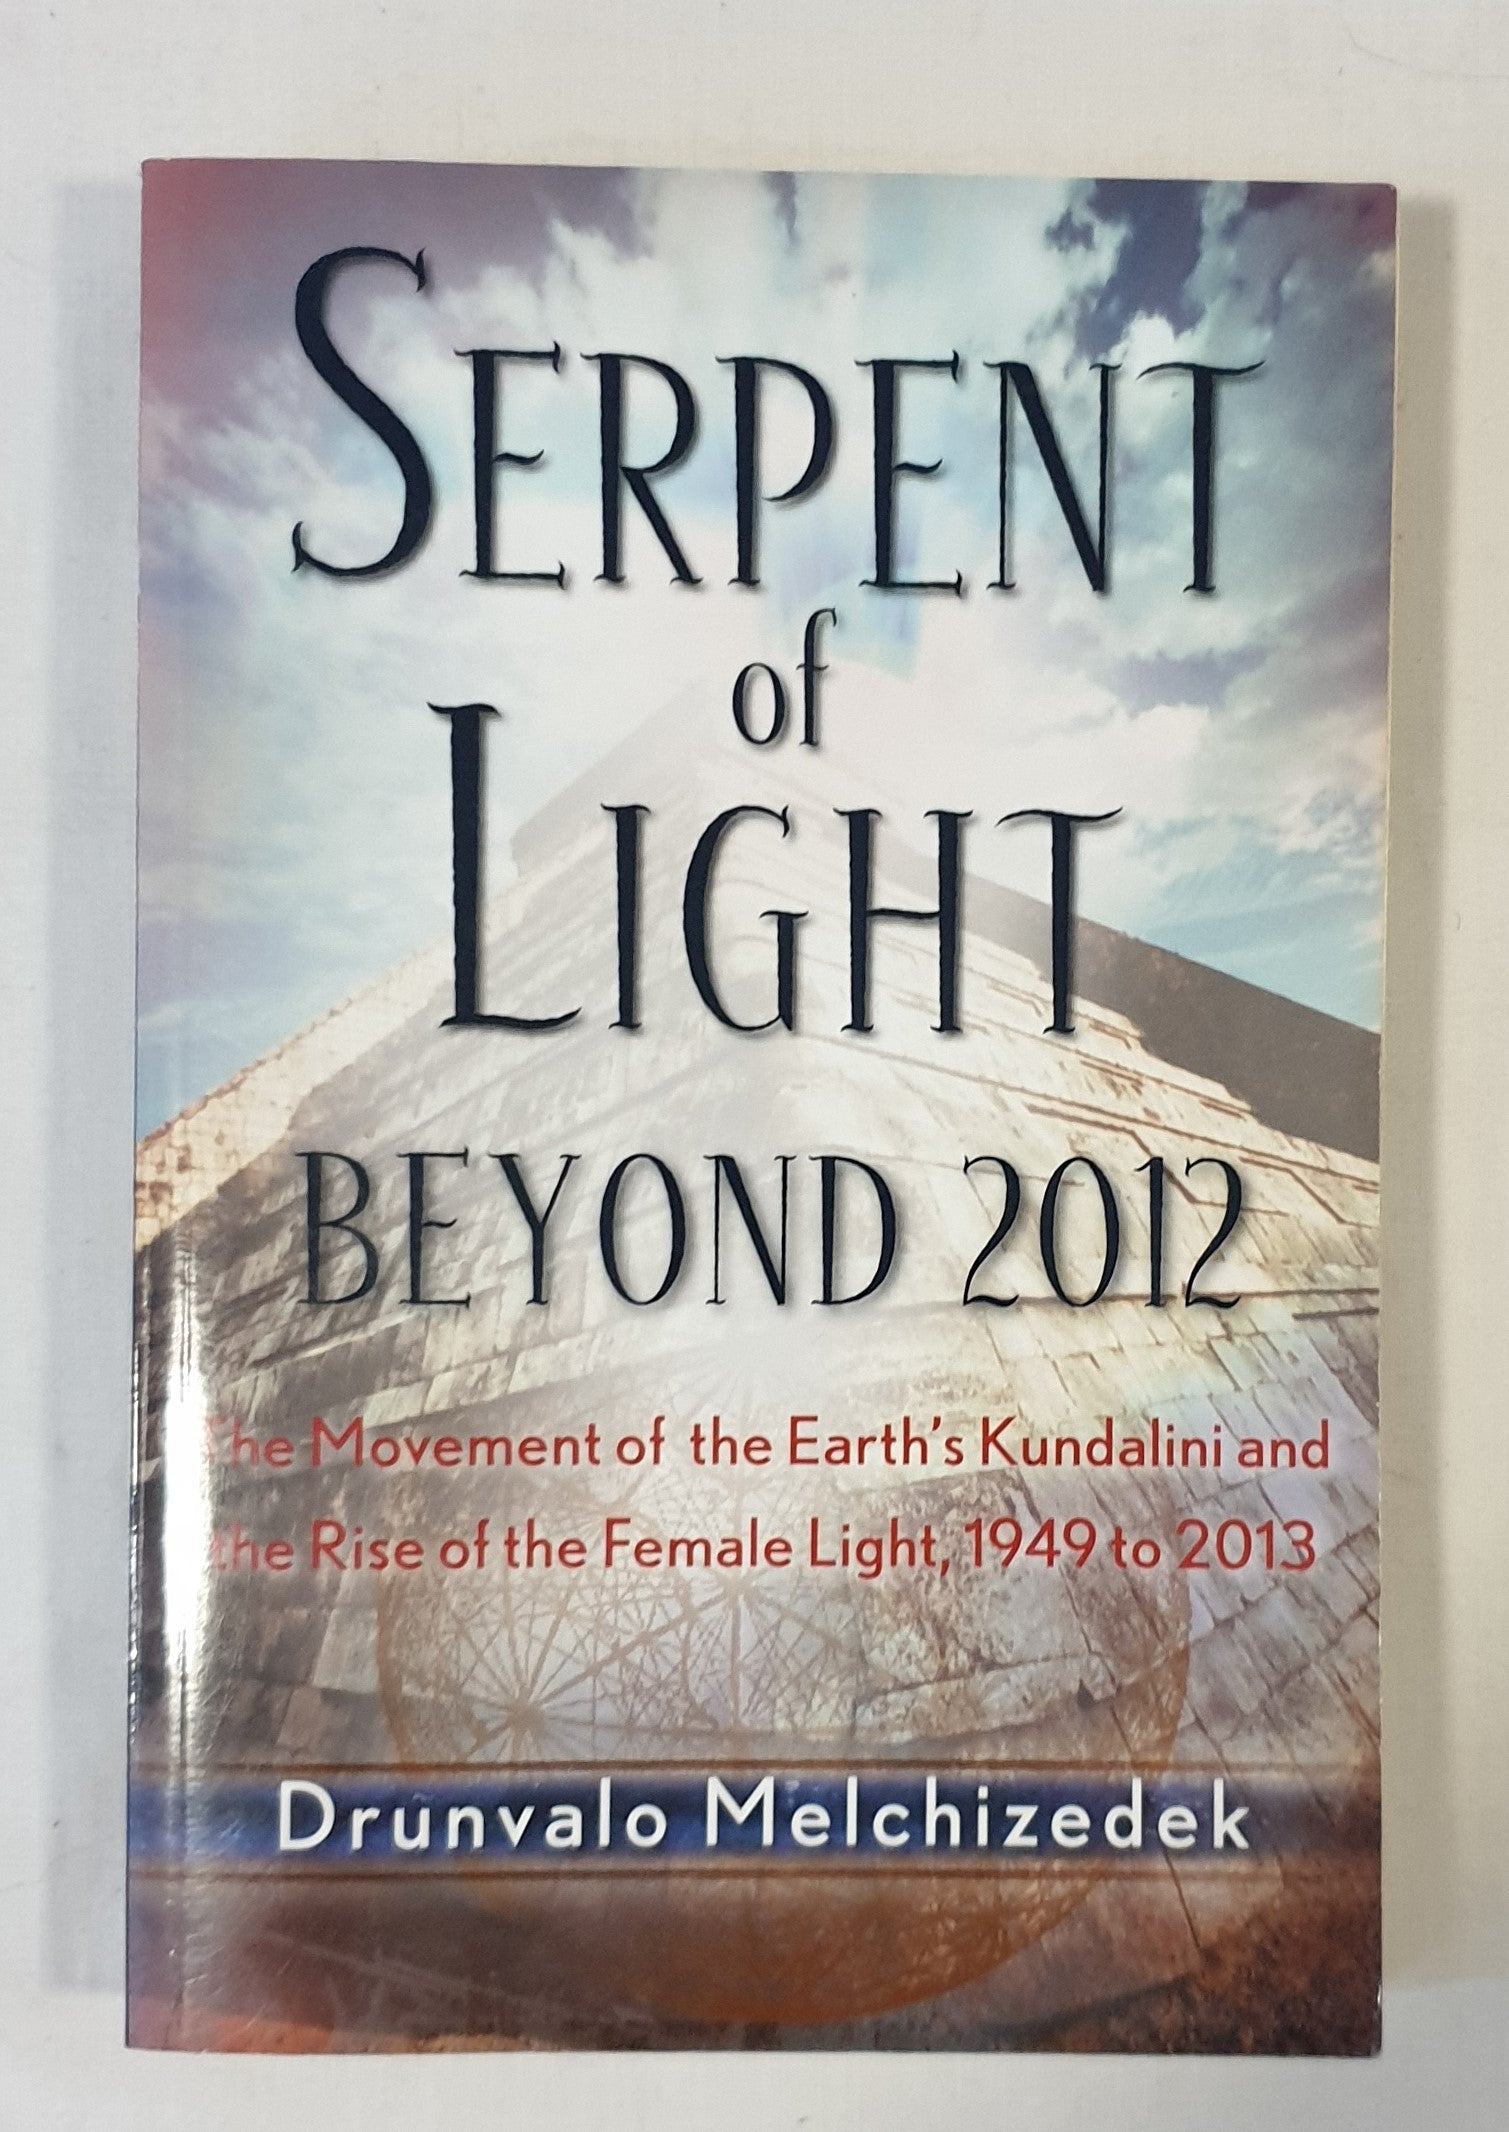 Serpent of Light Beyond 2012 by Drunvalo Melchizedek